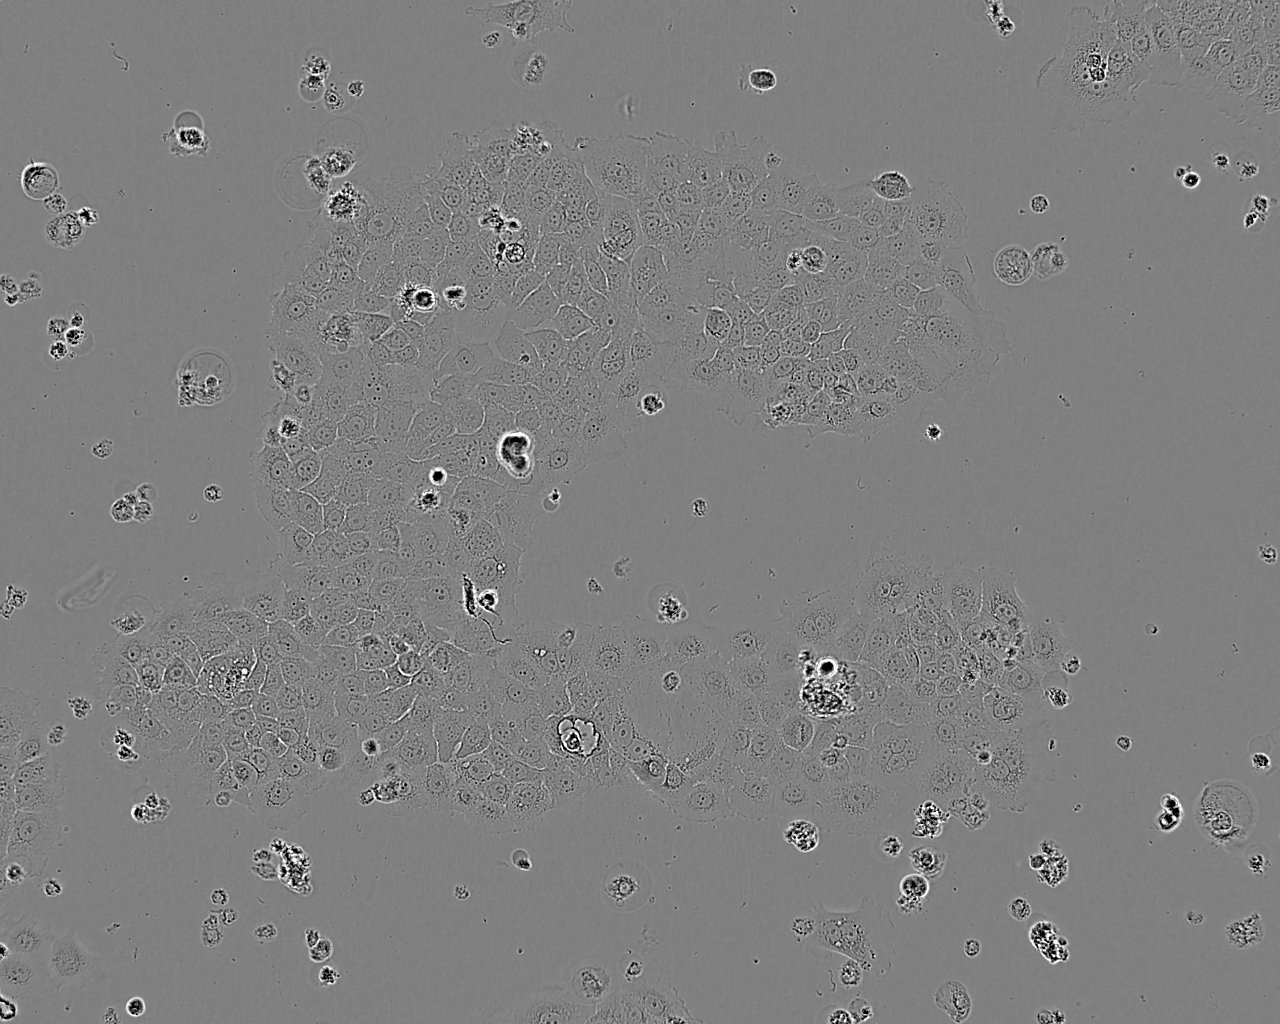 MX-1 epithelioid cells人乳腺癌细胞系